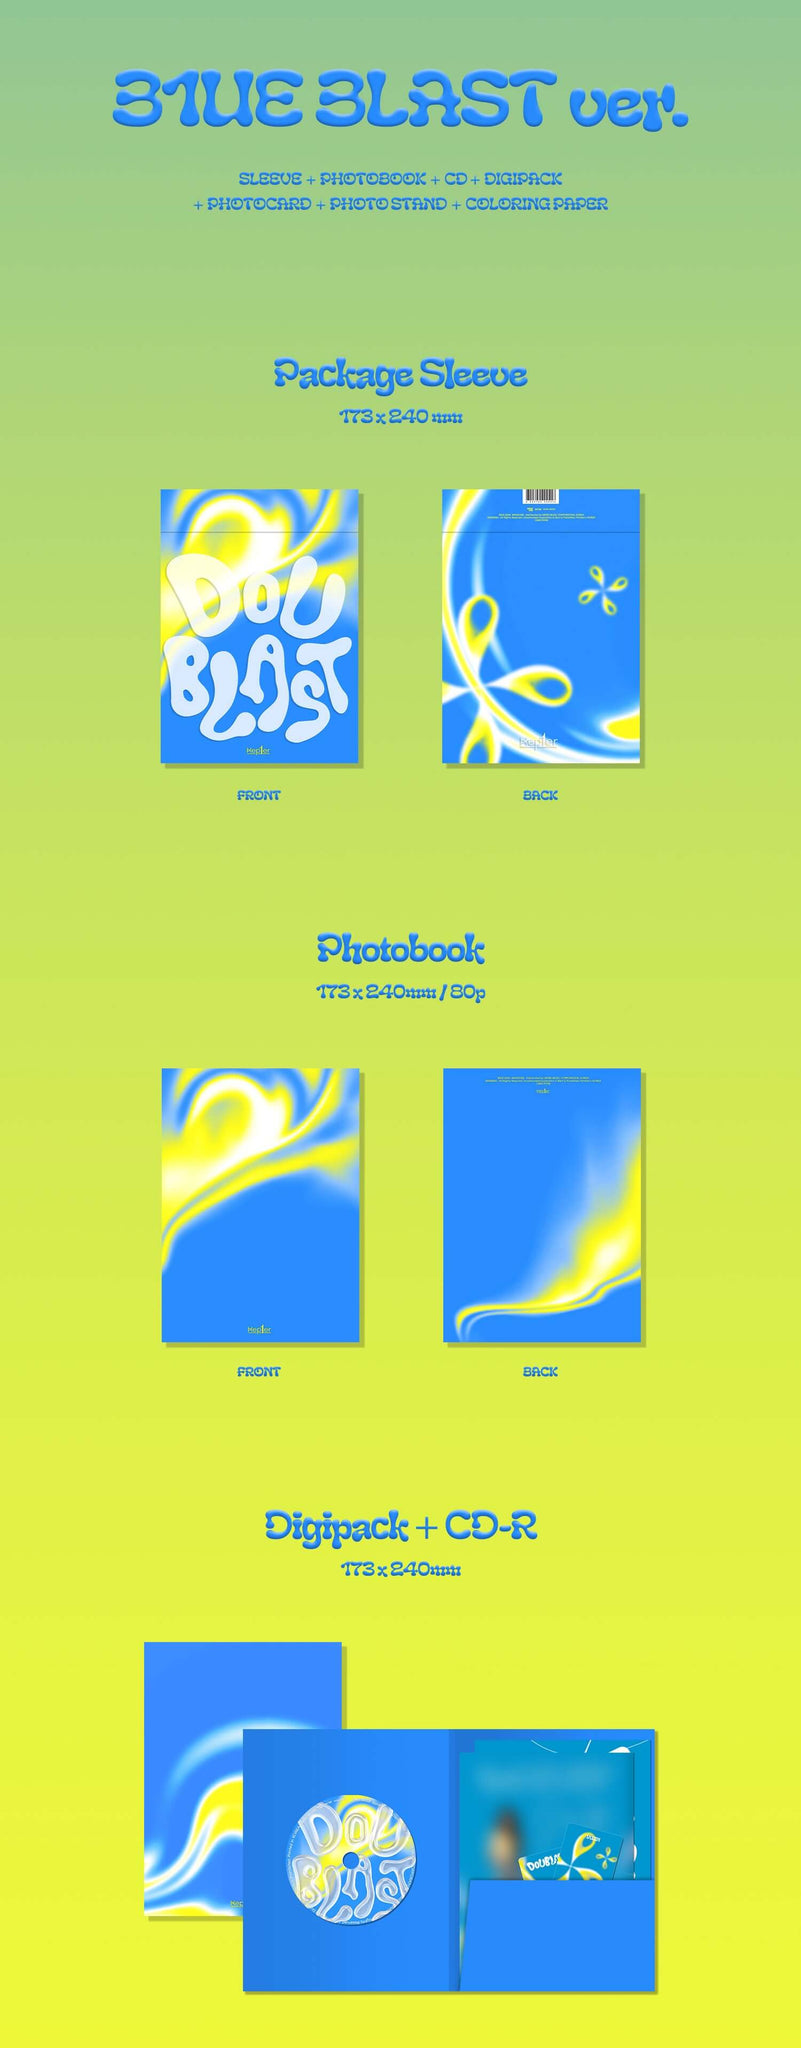 Kep1er DOUBLAST B1UE BLAST Version Inlcusions Package Sleeve Photobook Digipack + CD